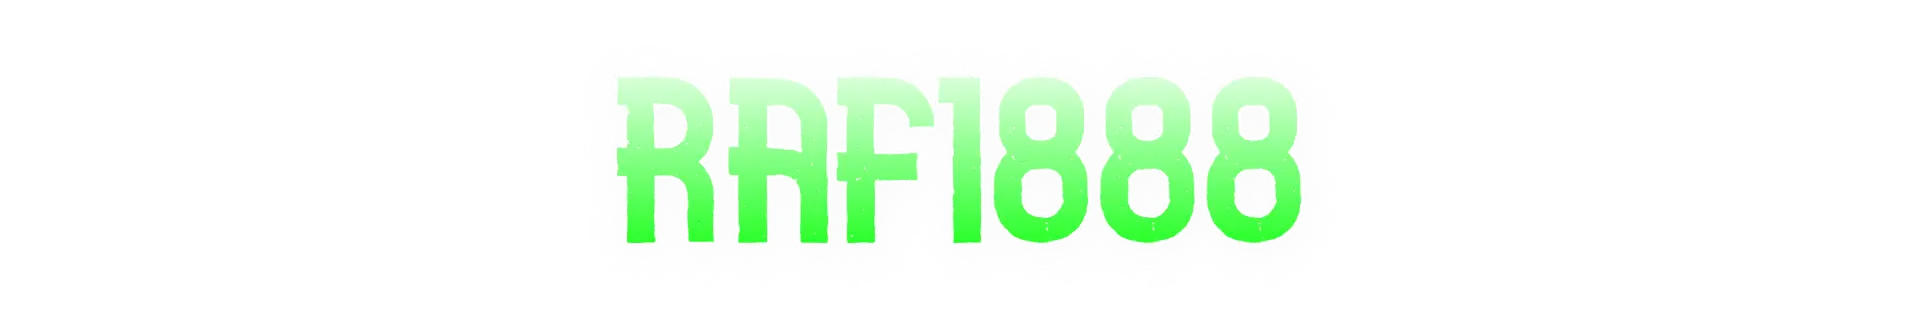 Rafi888